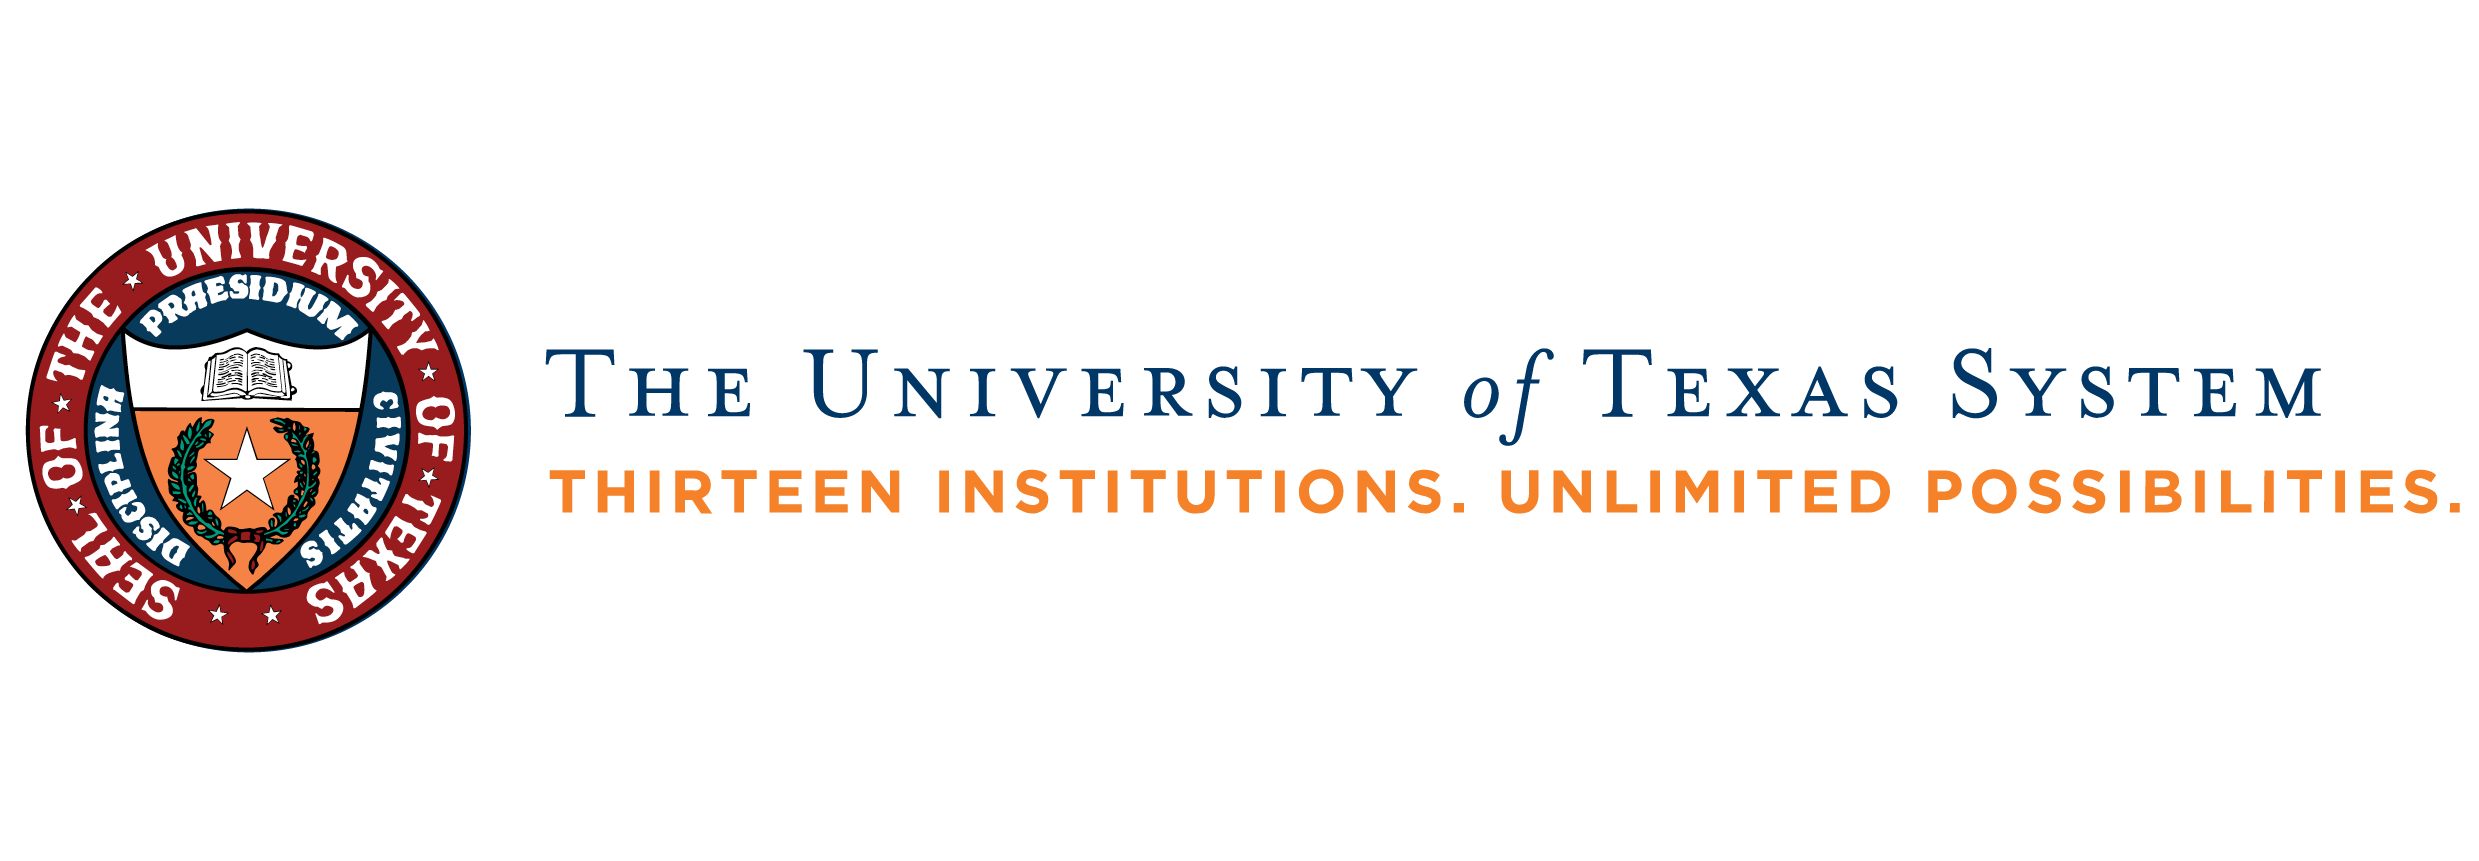 The University of Texas System logo